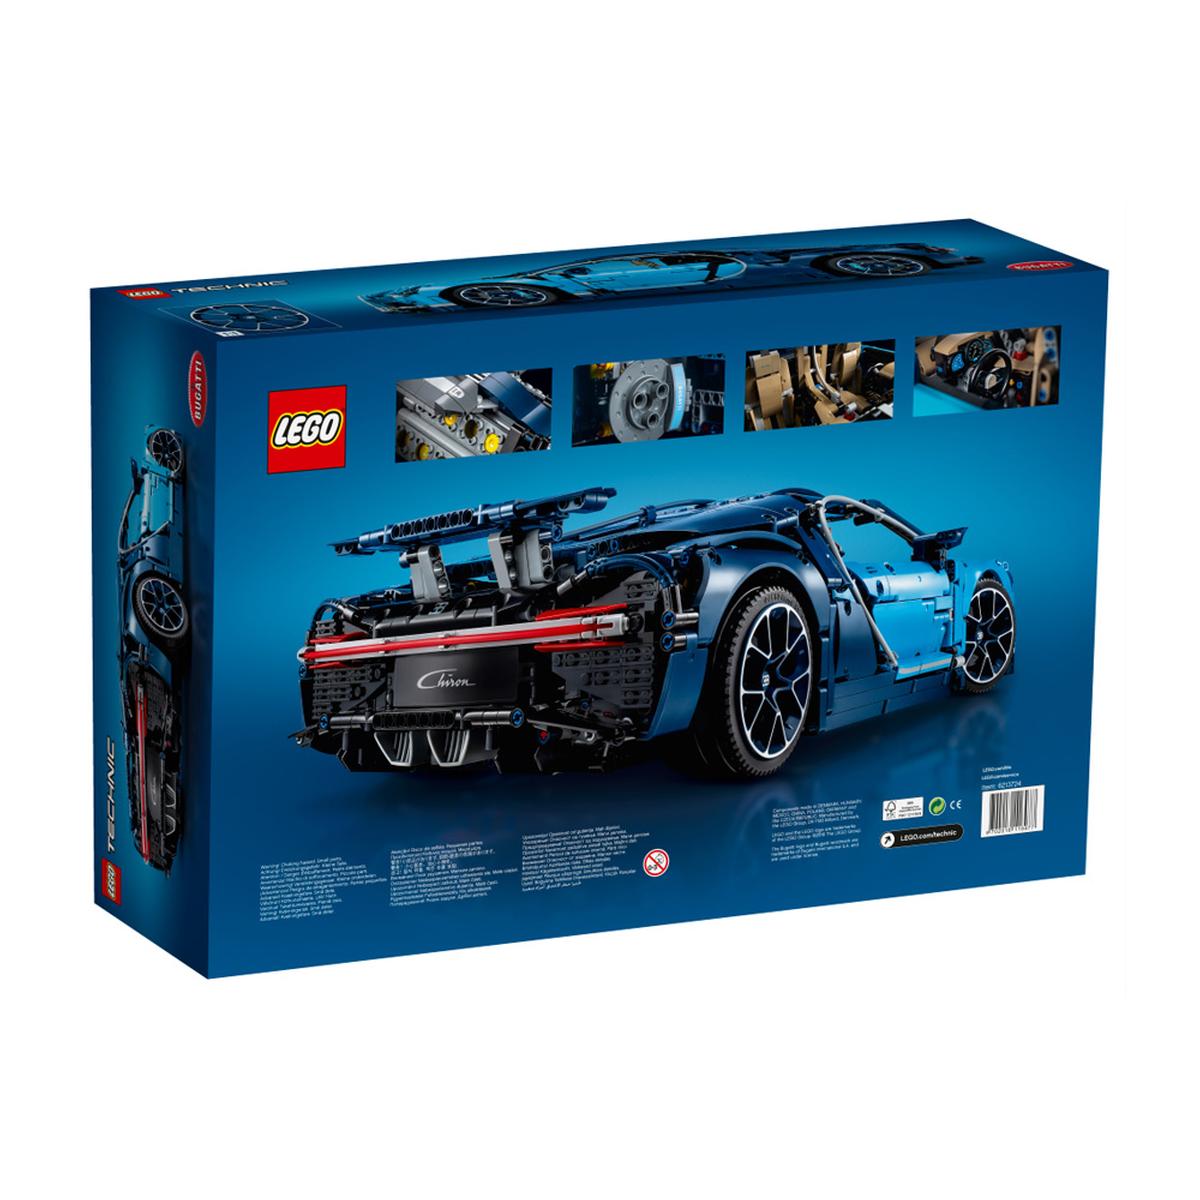 LEGO Technic - Bugatti Chiron - 42083 | Lego Technic | Toys"R"Us España